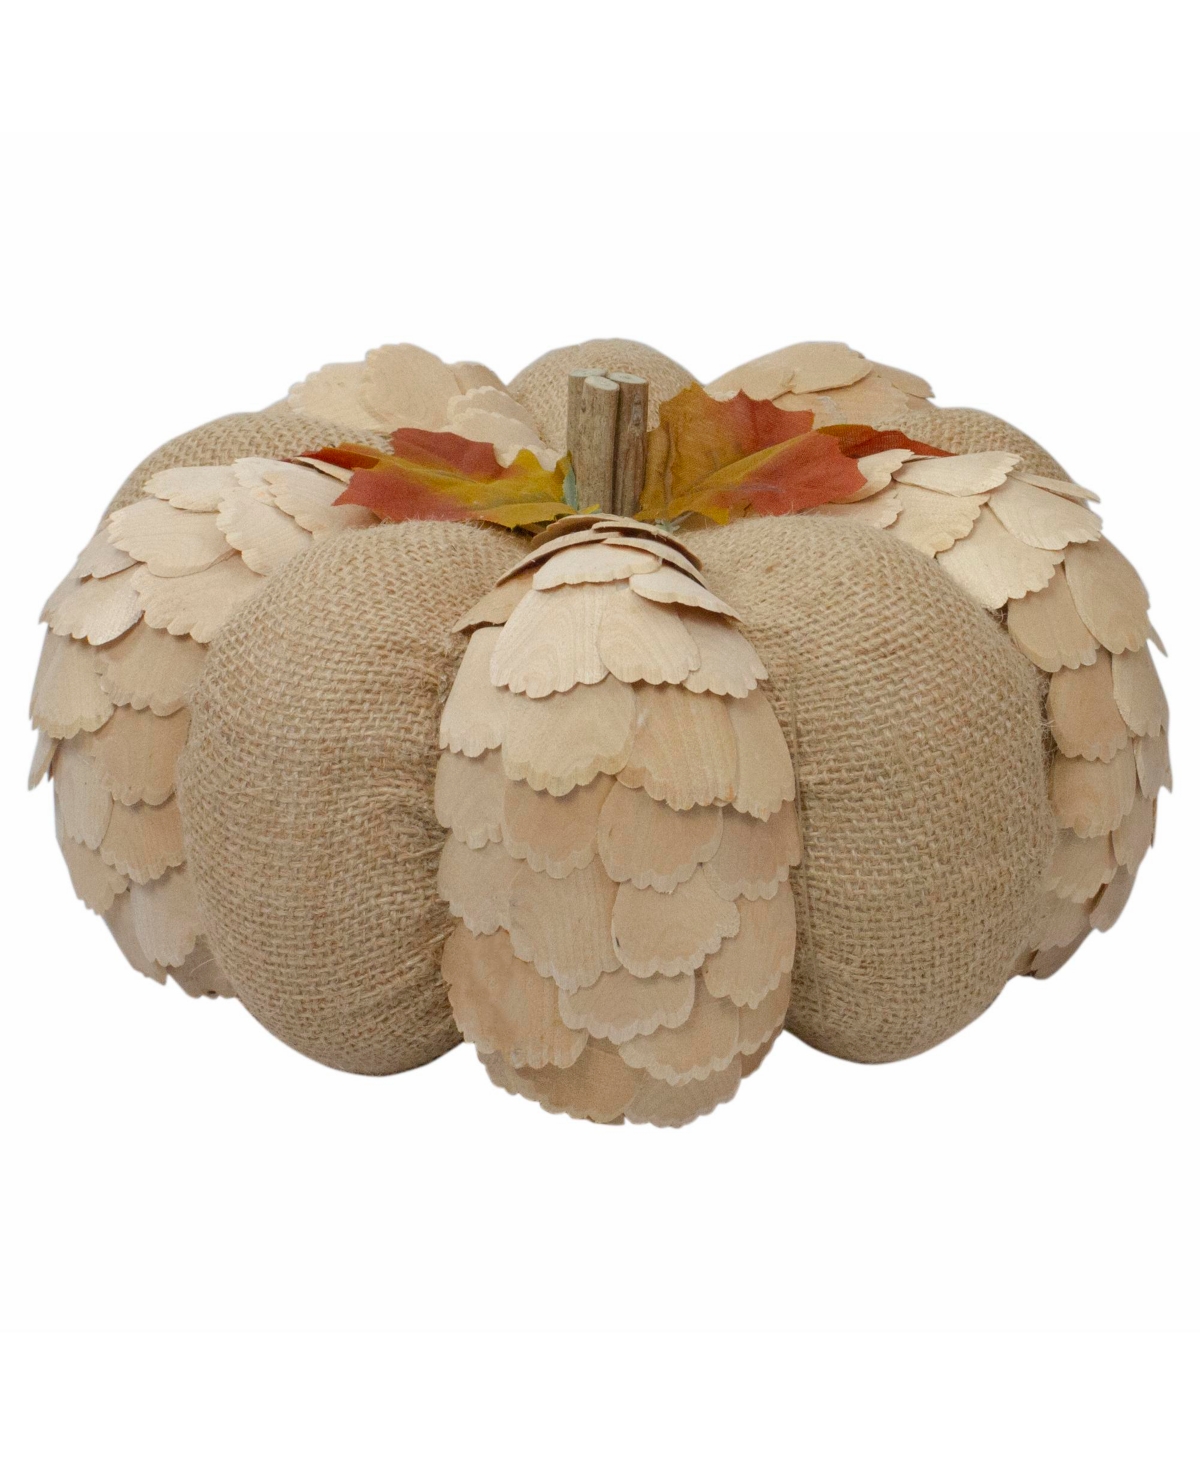 Autumn Harvest Tabletop Pumpkin, 9" - Brown